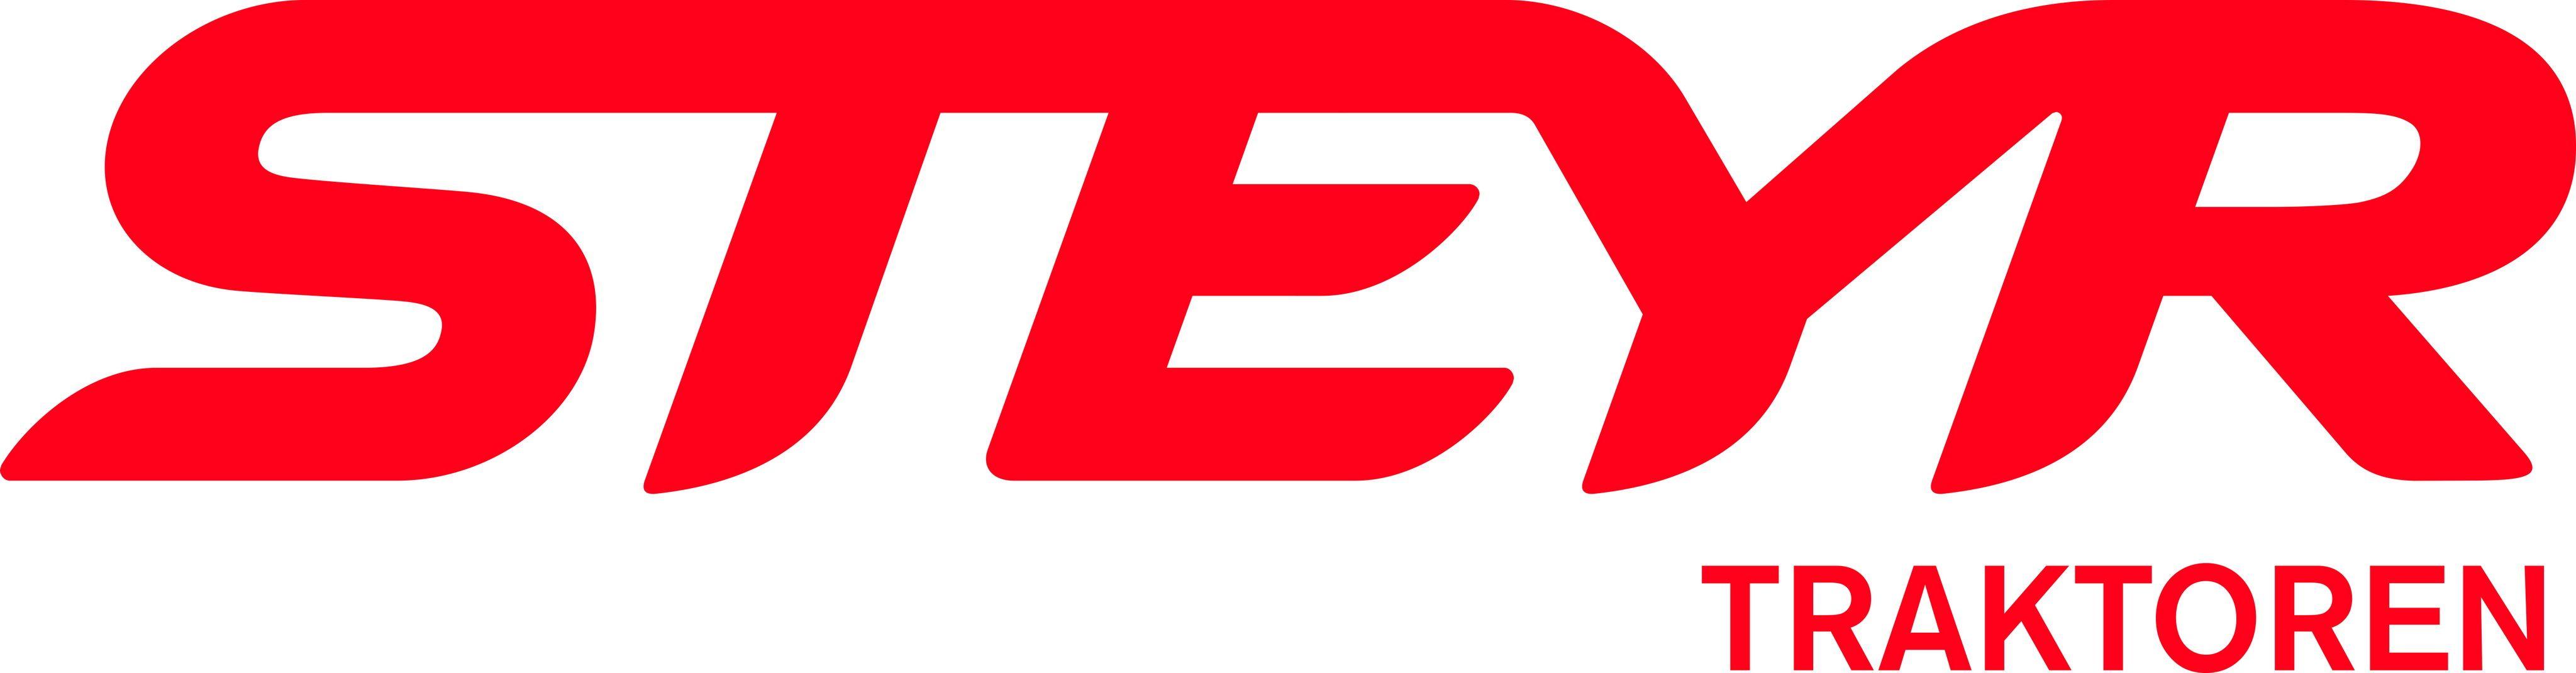 Styer Logo - Logo Steyr